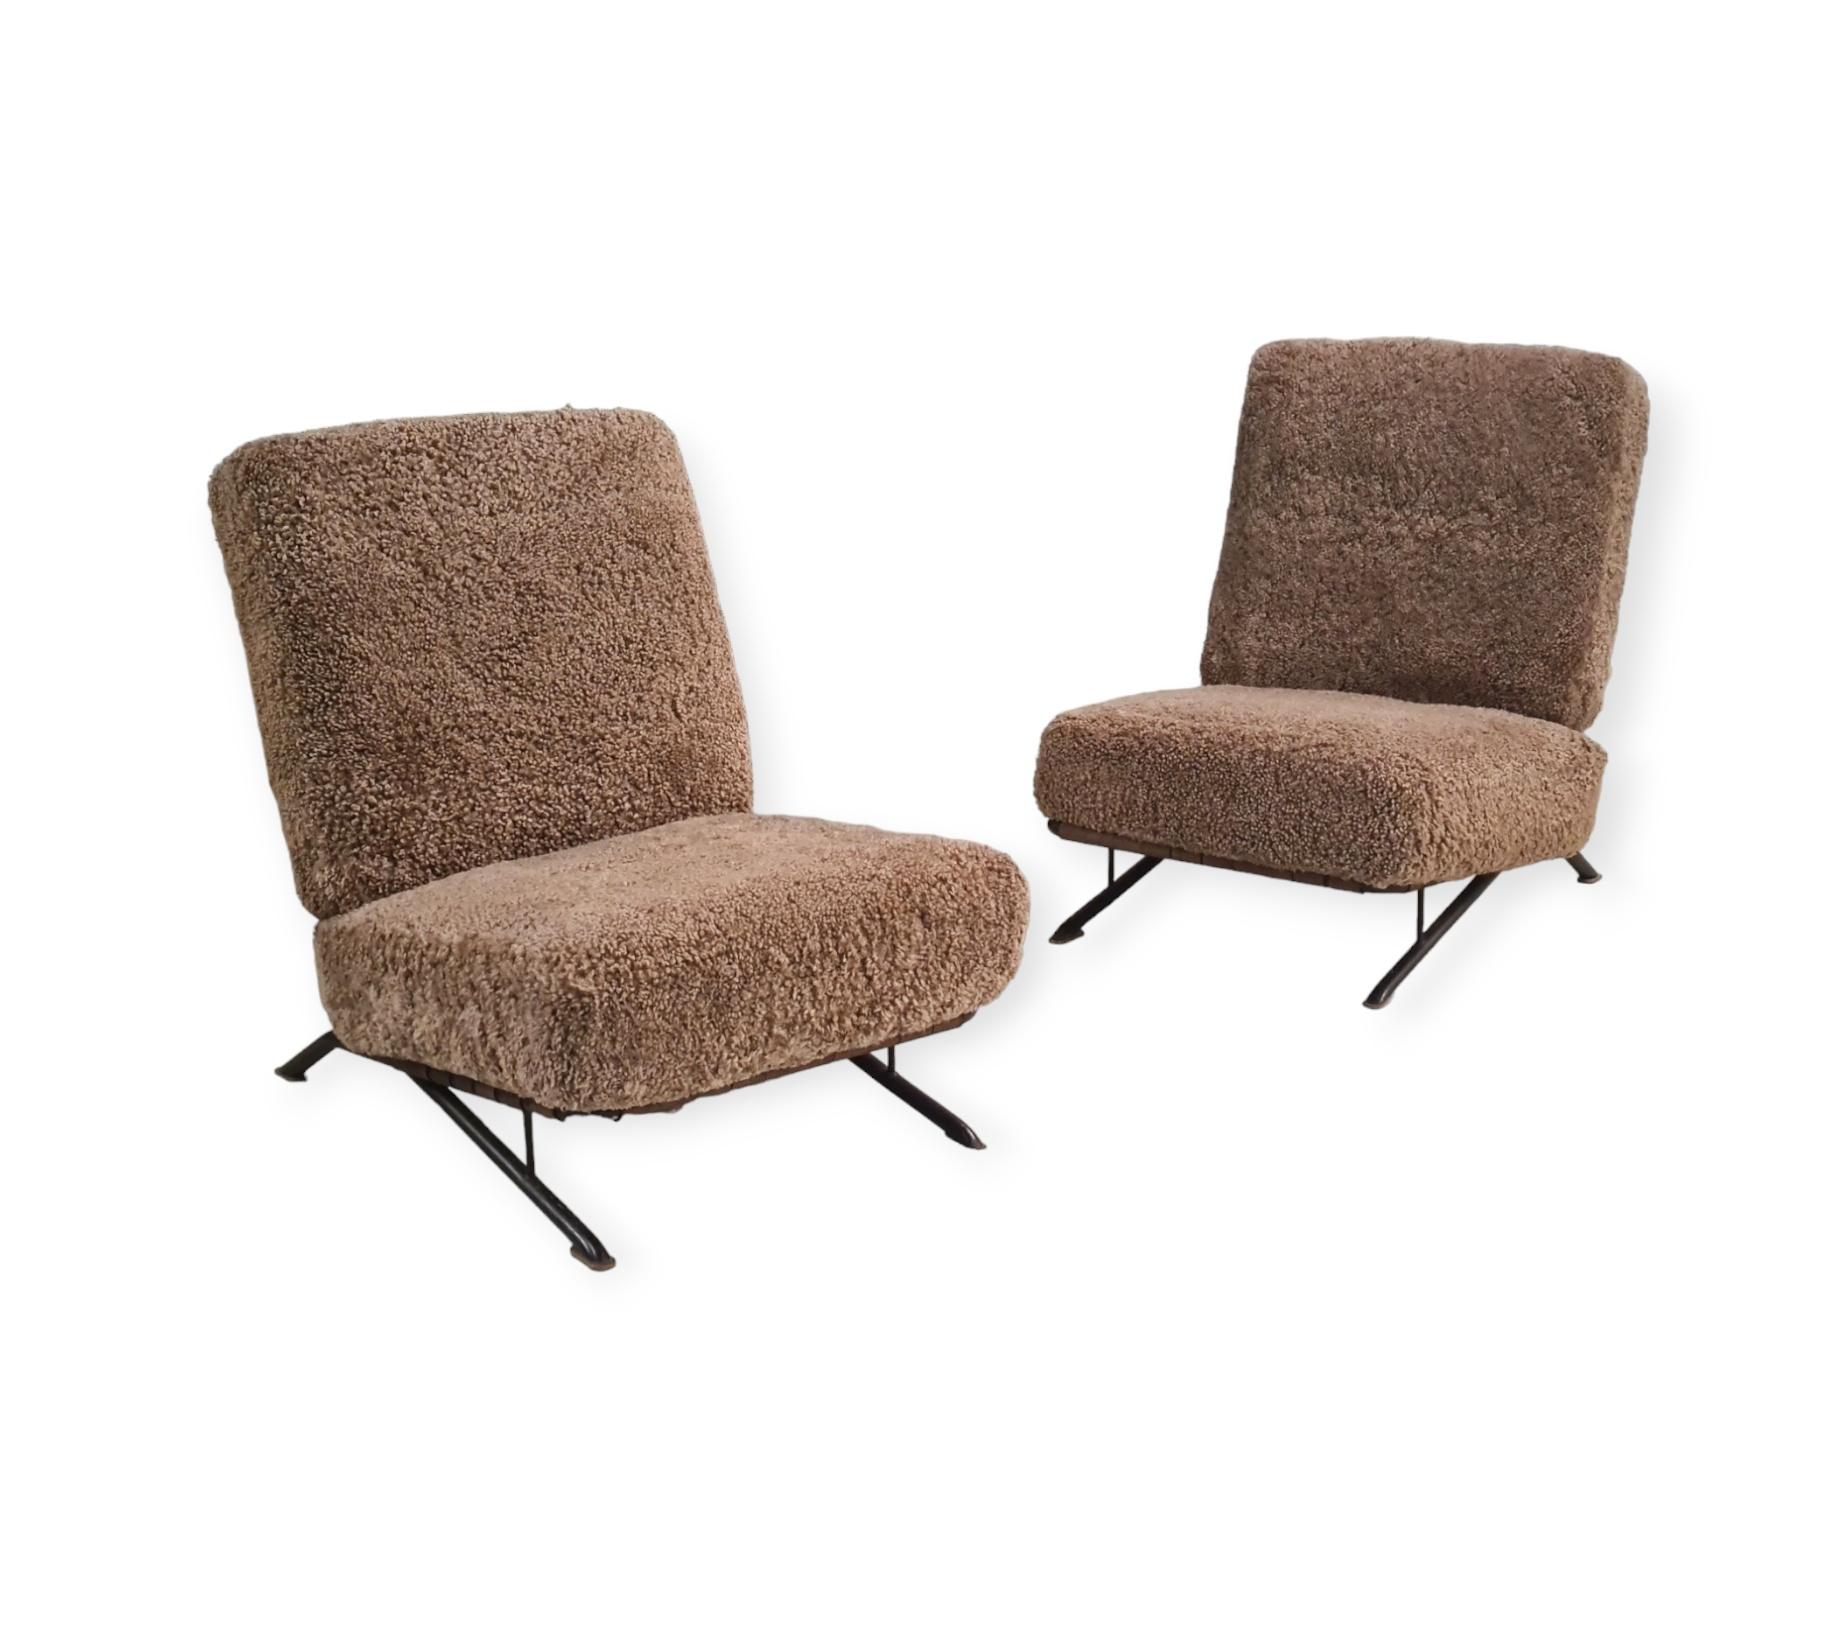 Pair of Commissioned Ilmari Tapiovaara Lounge Chairs, Merivaara 1950s For Sale 3